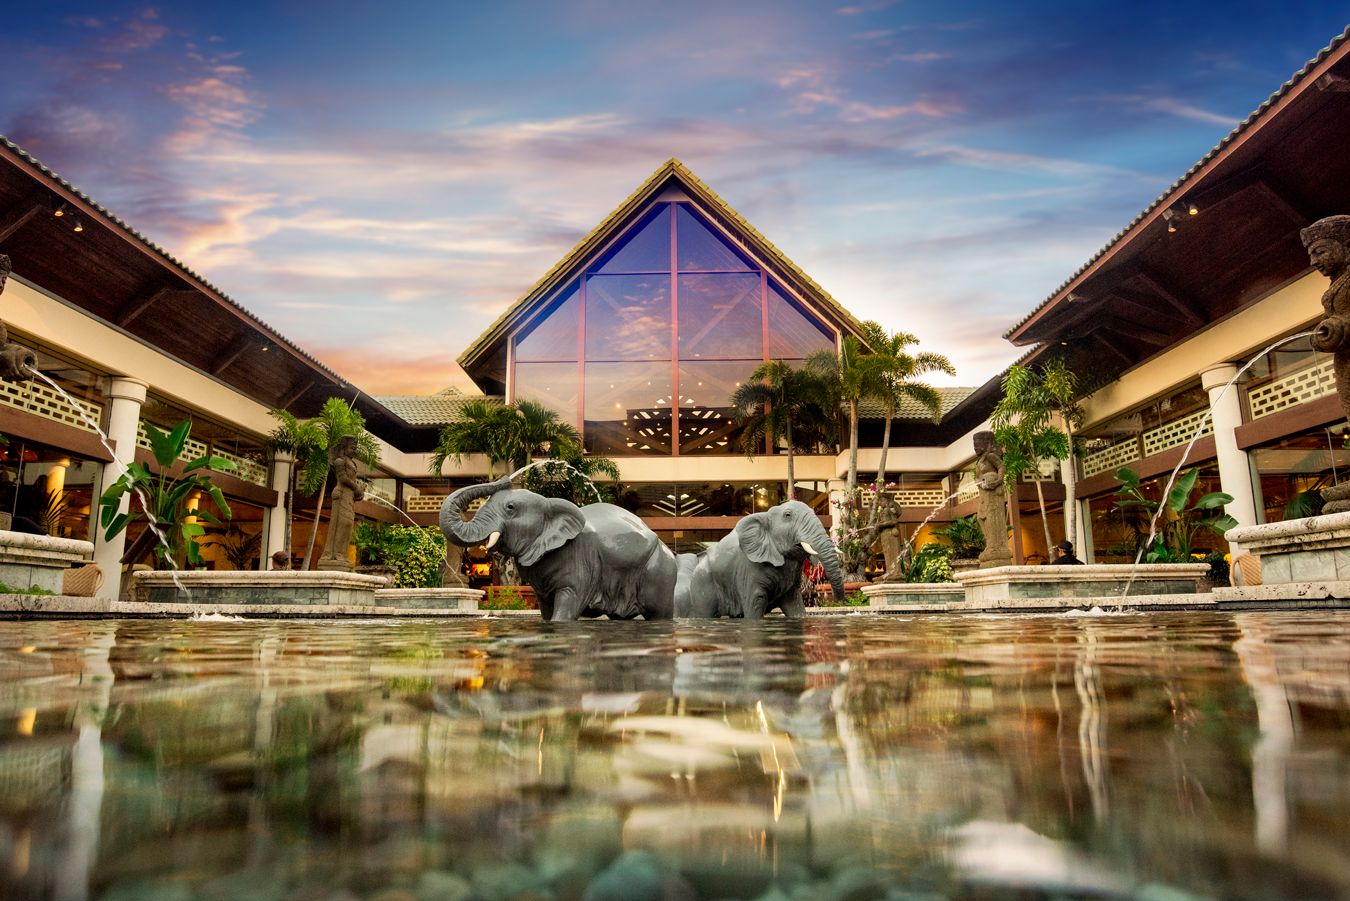 Elephant statue in courtyard fountain